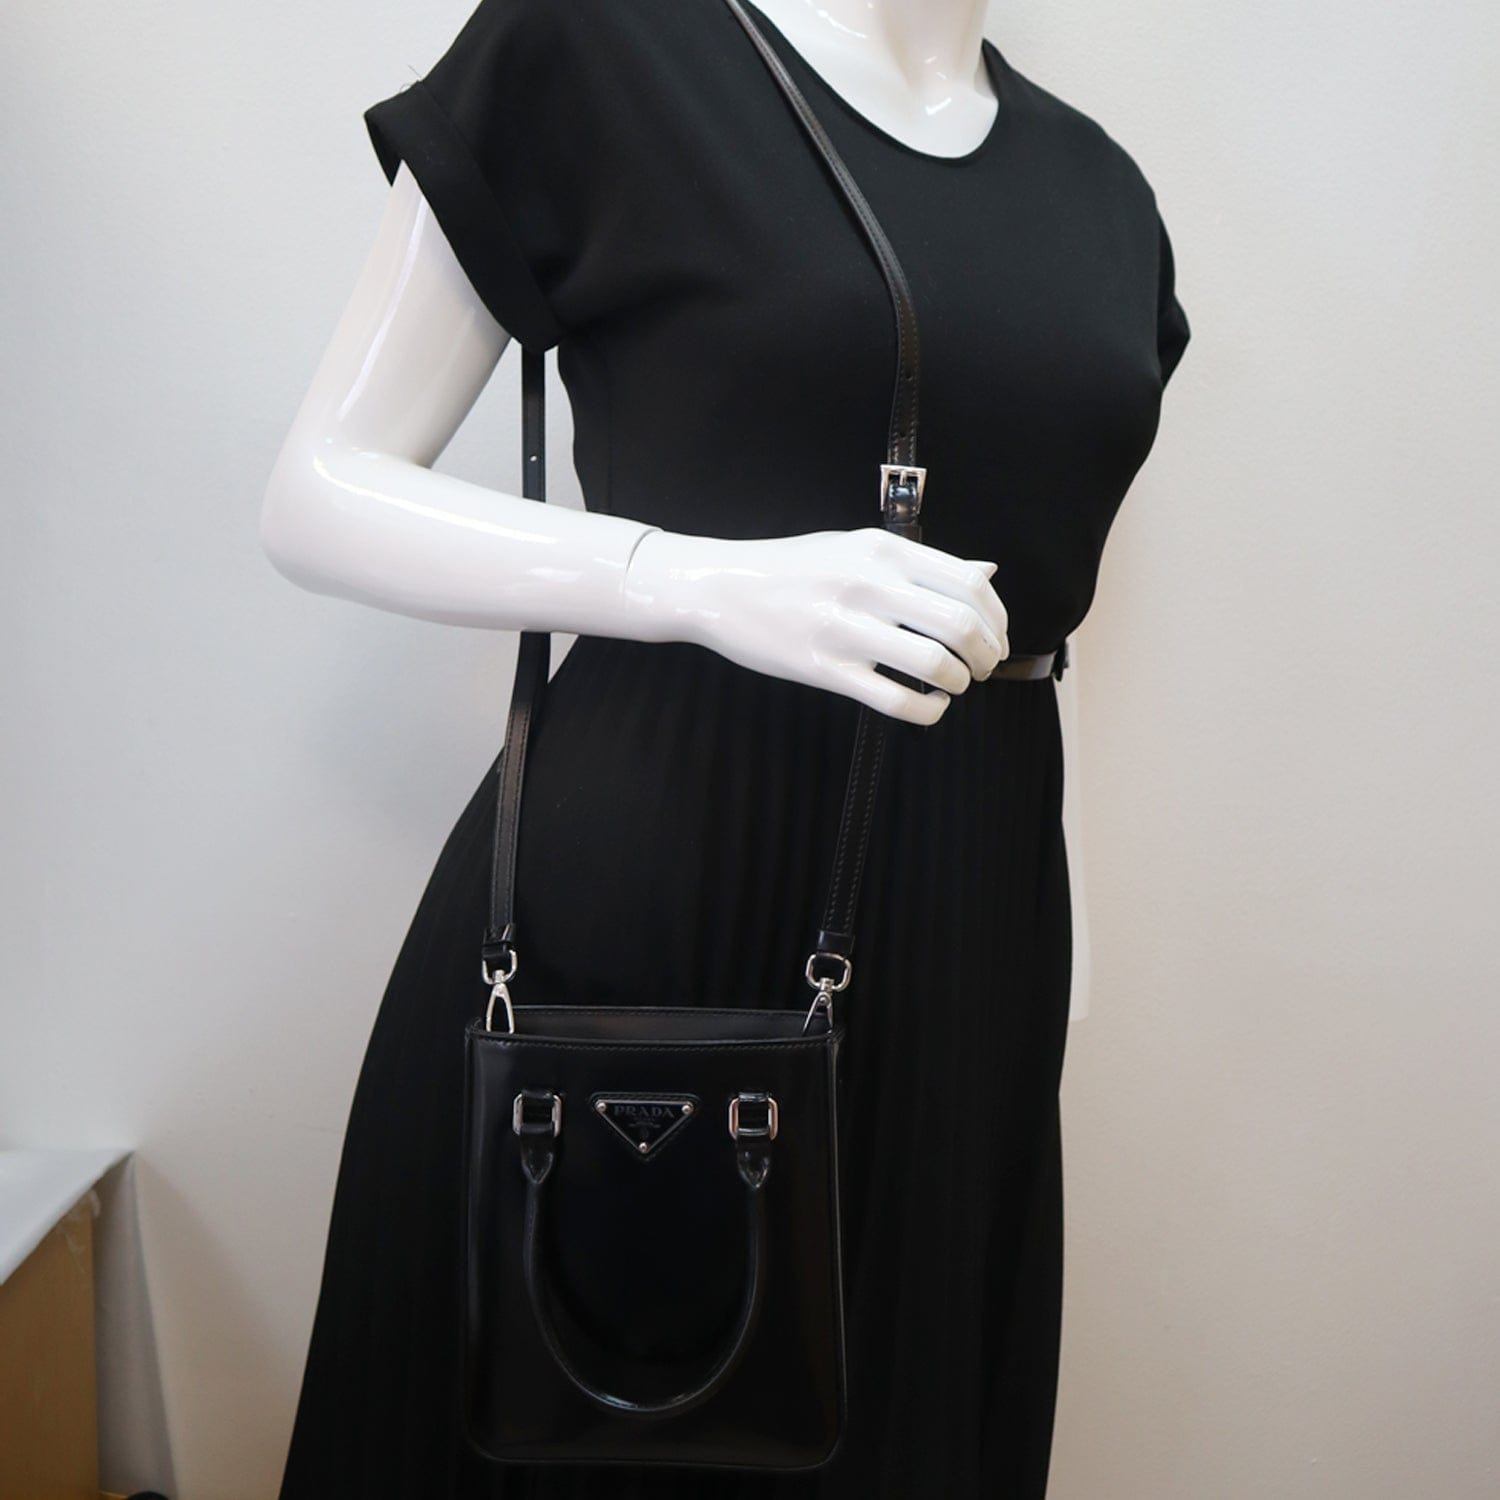 Brushed leather mini-bag with shoulder strap